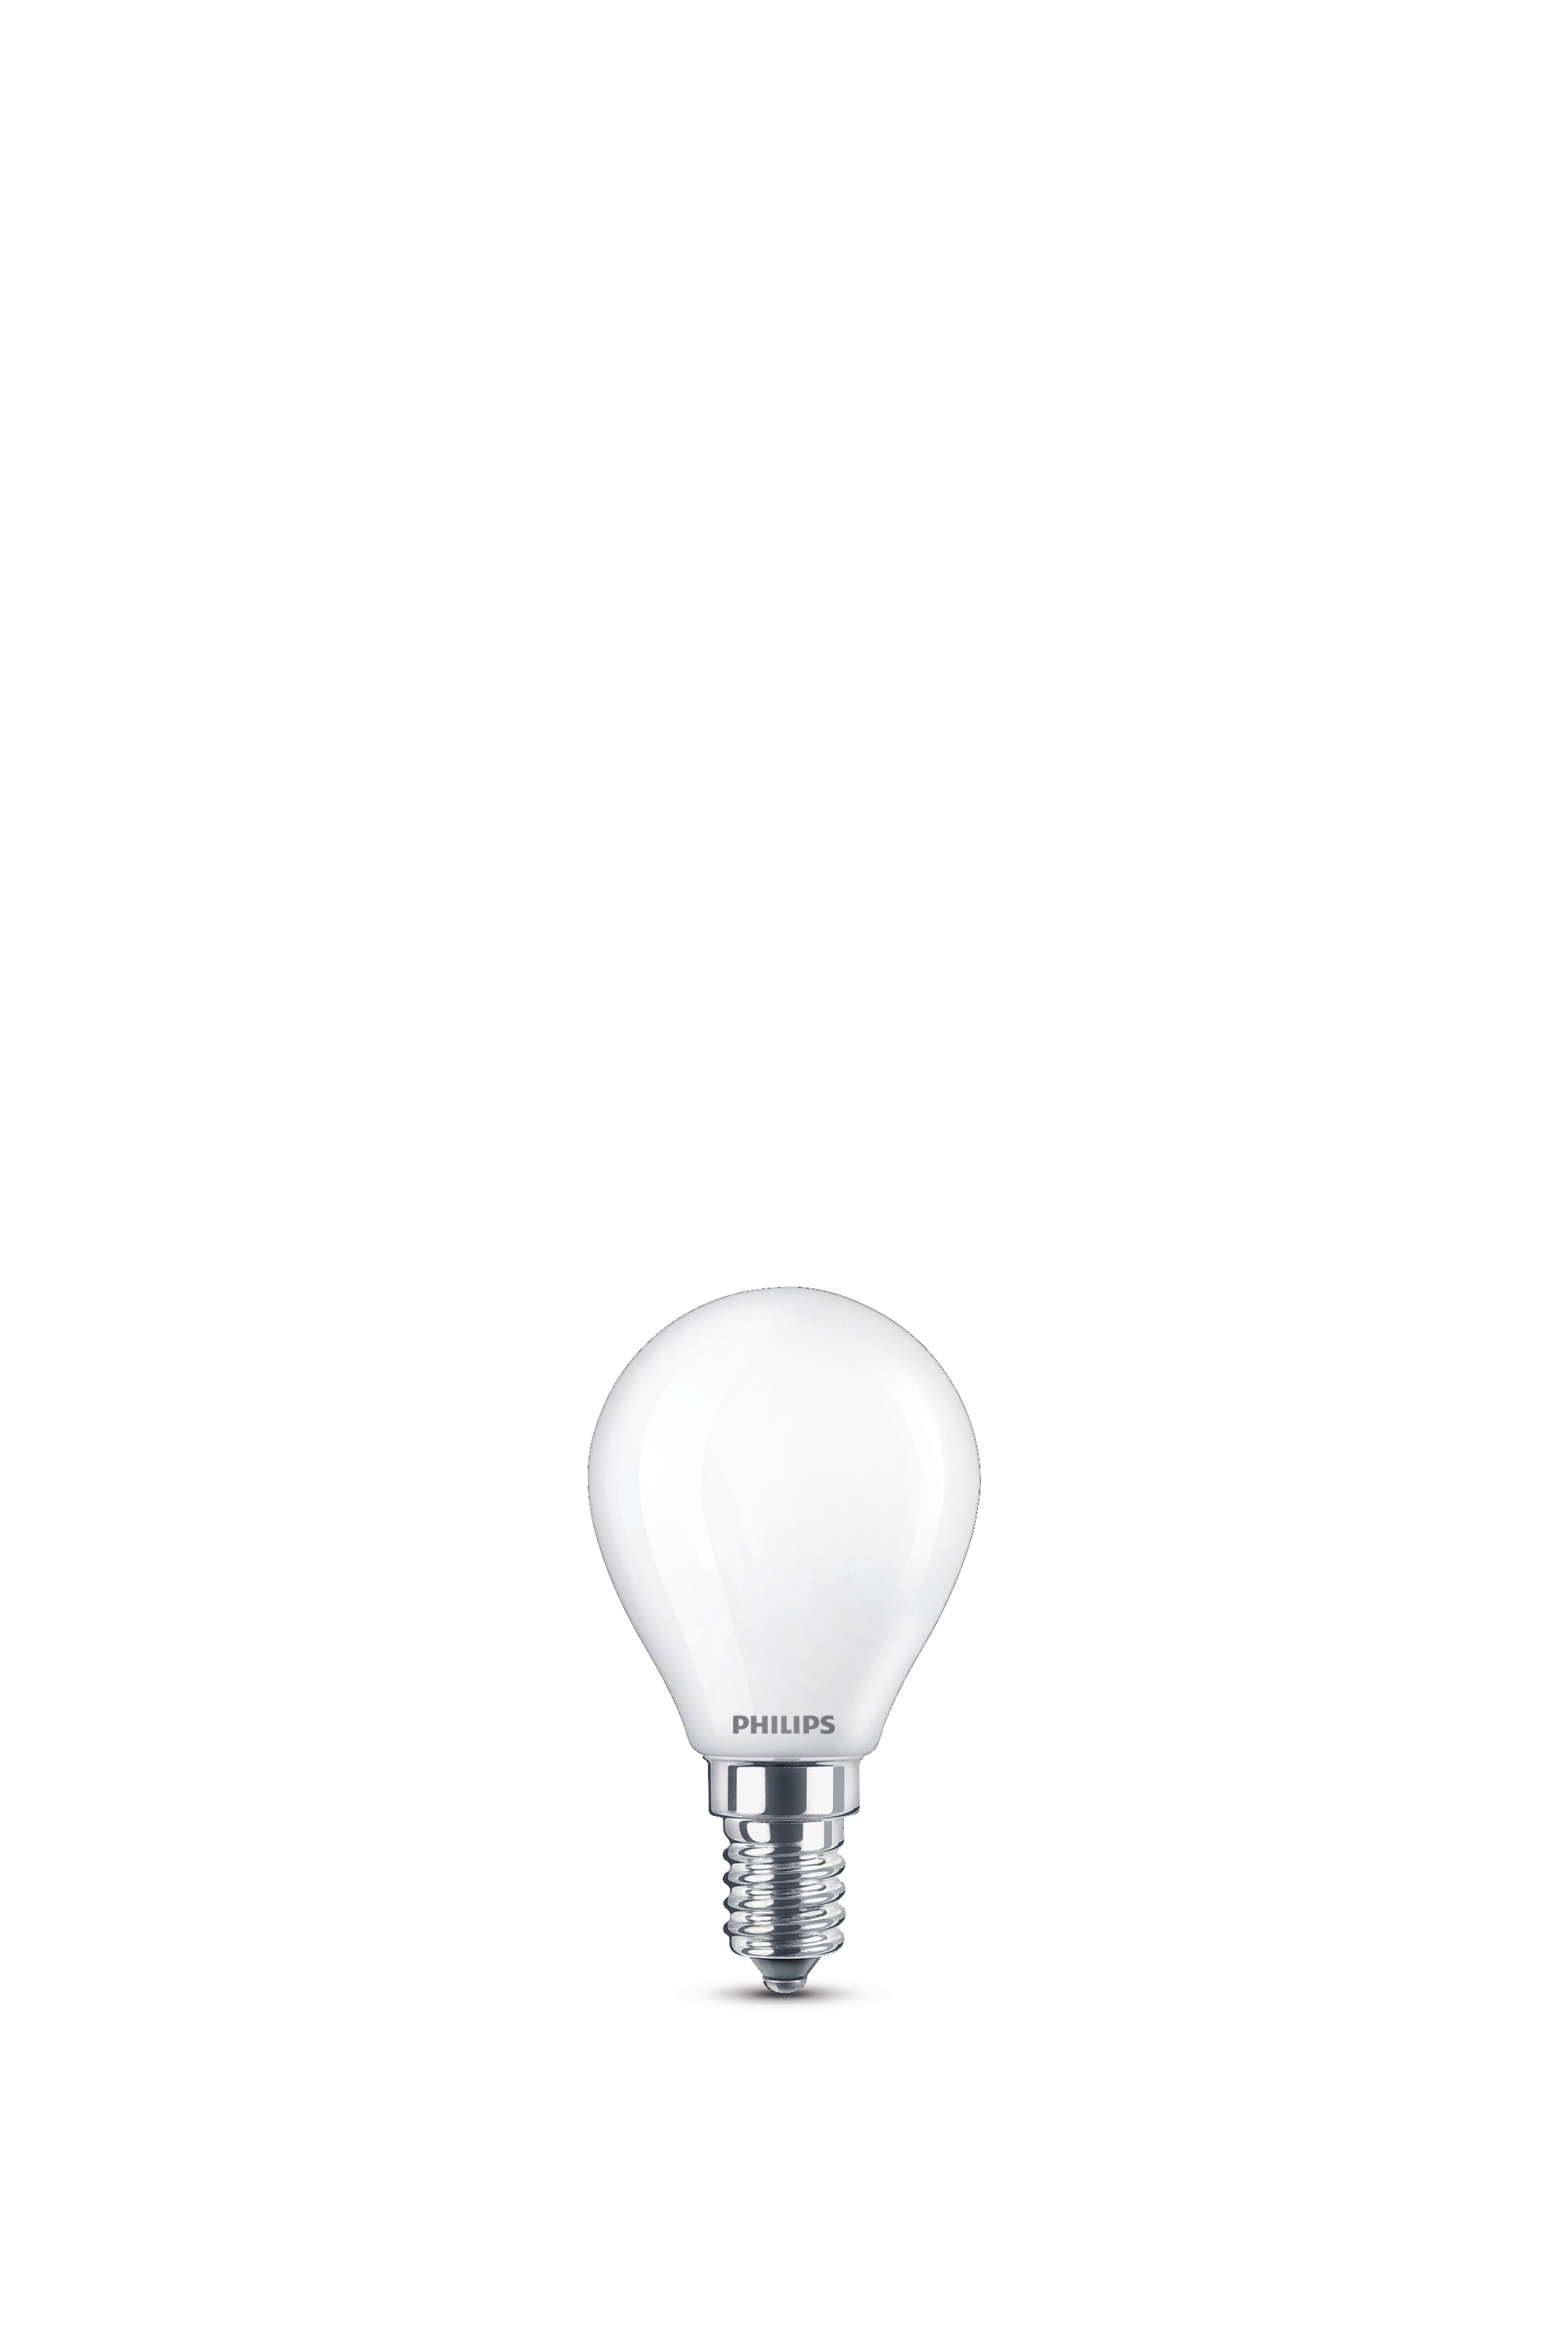 PHILIPS LEDclassic Lampe ersetzt LED Lampe kaltweiß 40W